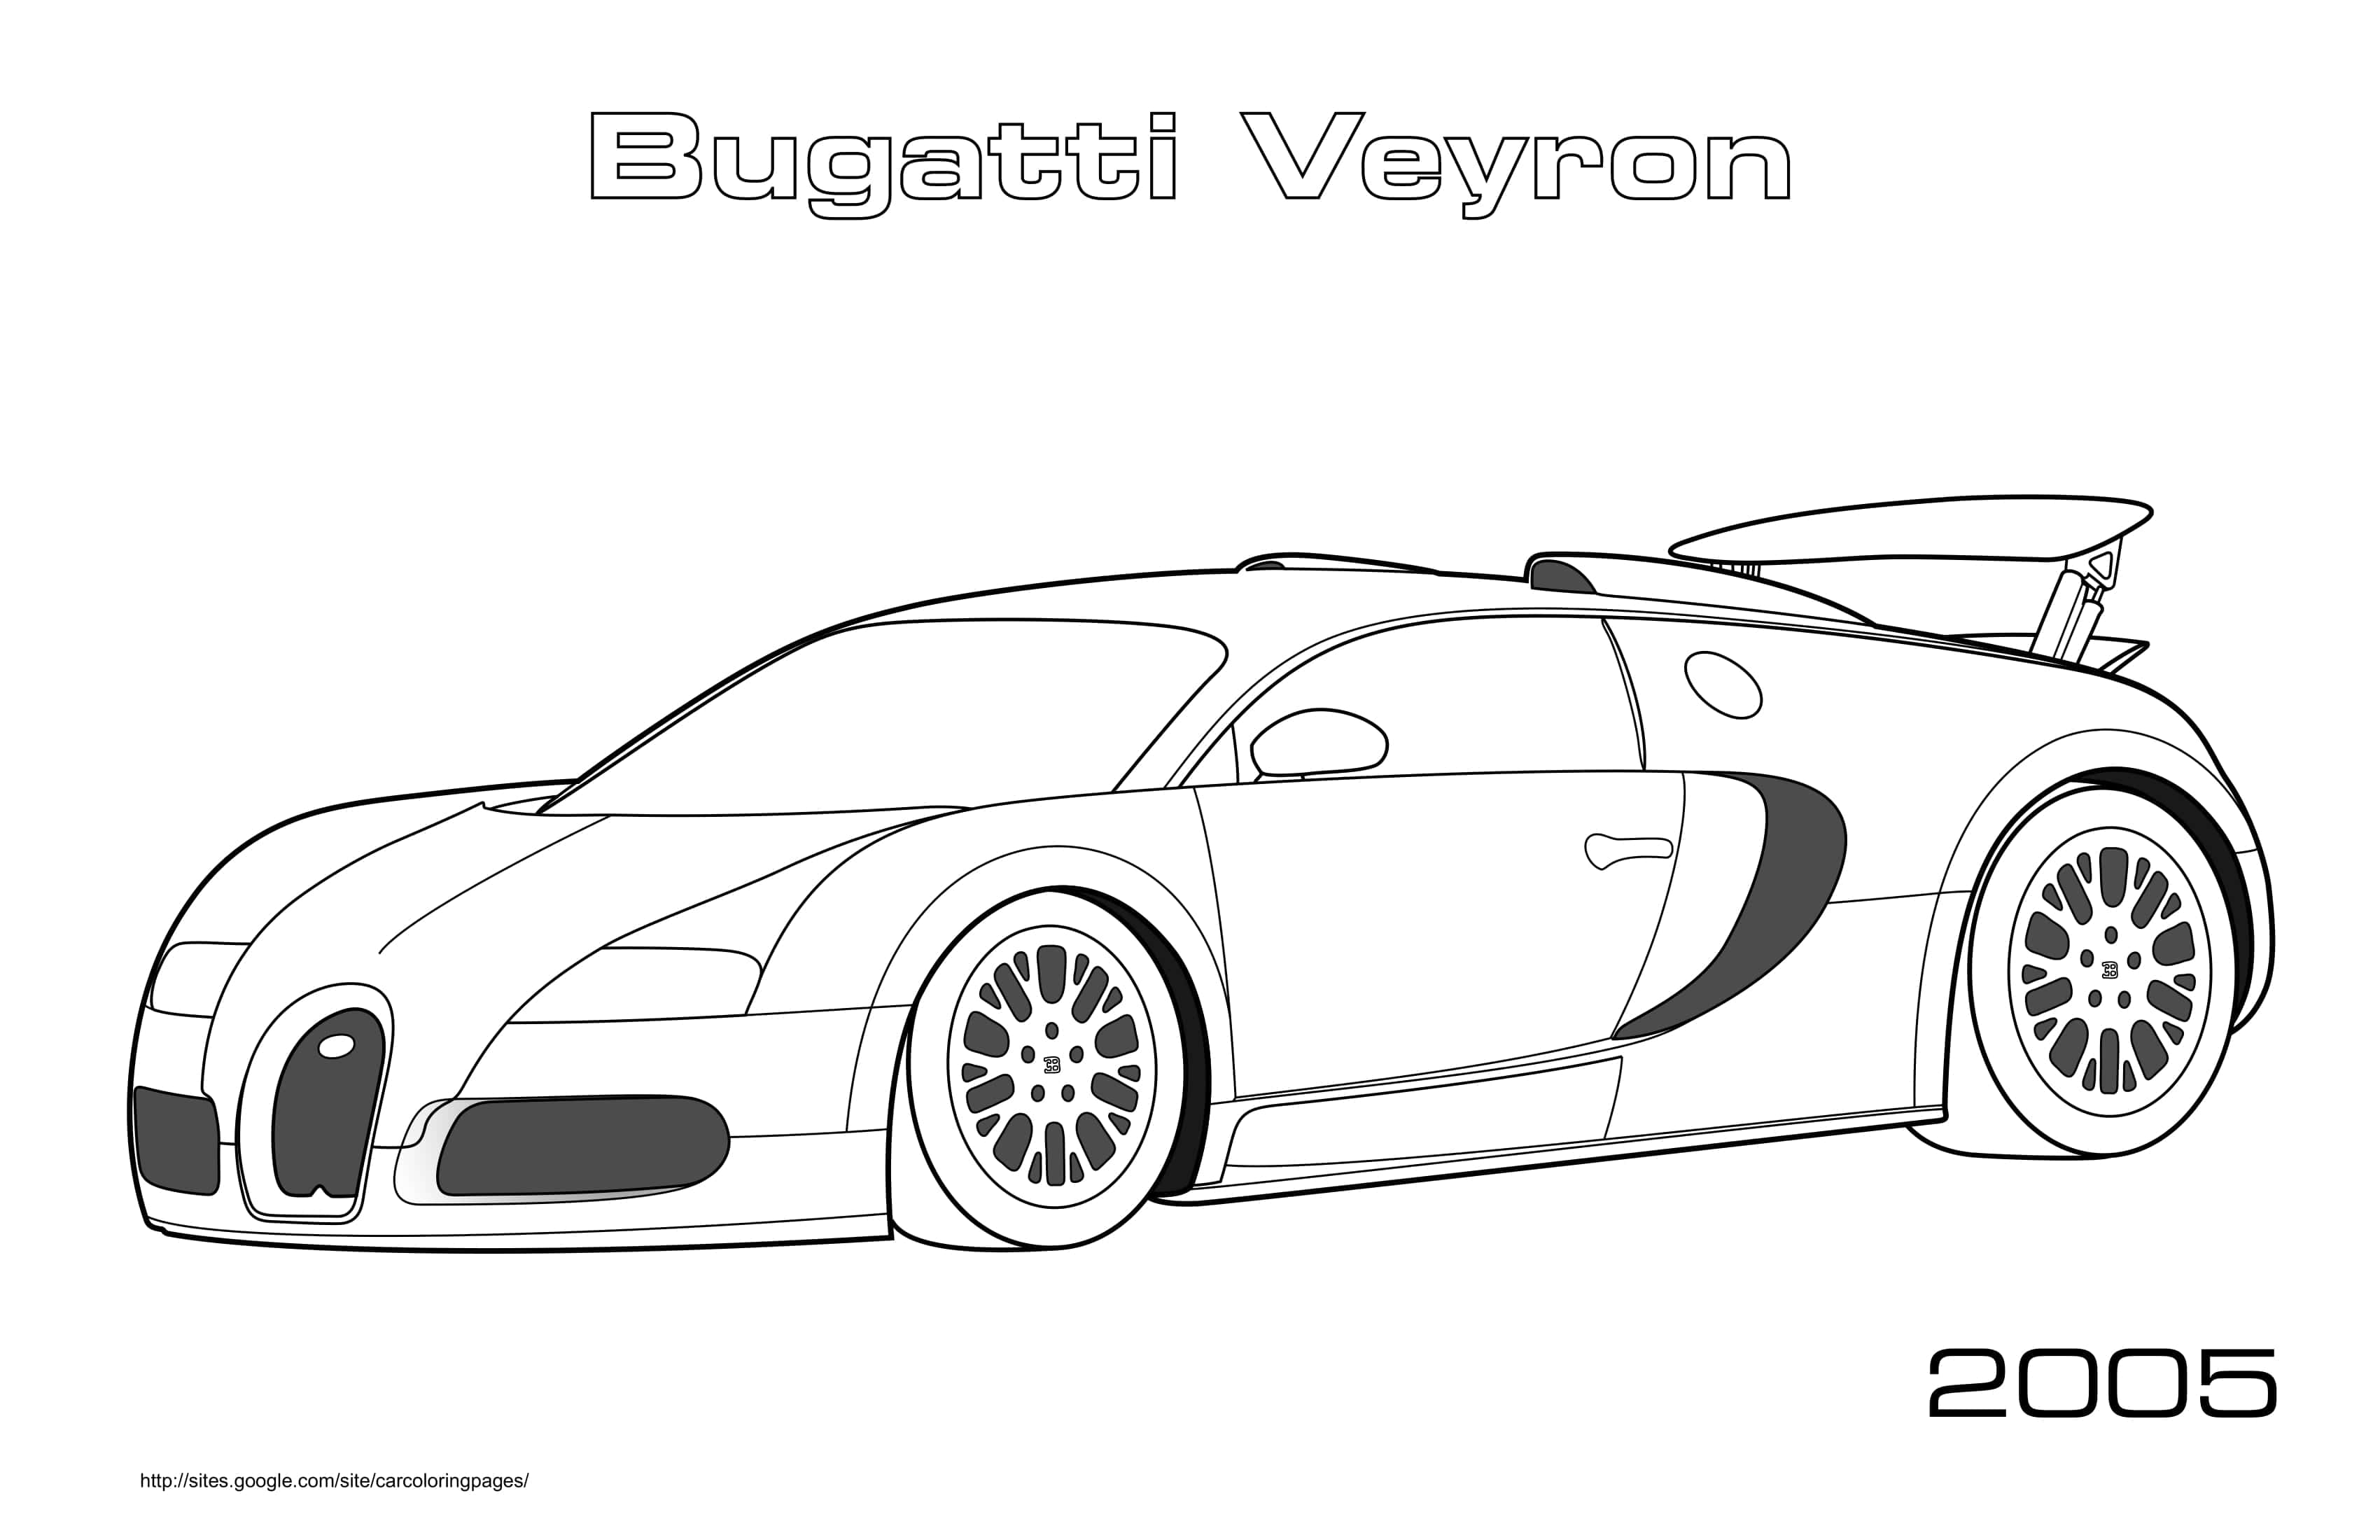 Bugatti Veyron 2005 Coloring Page